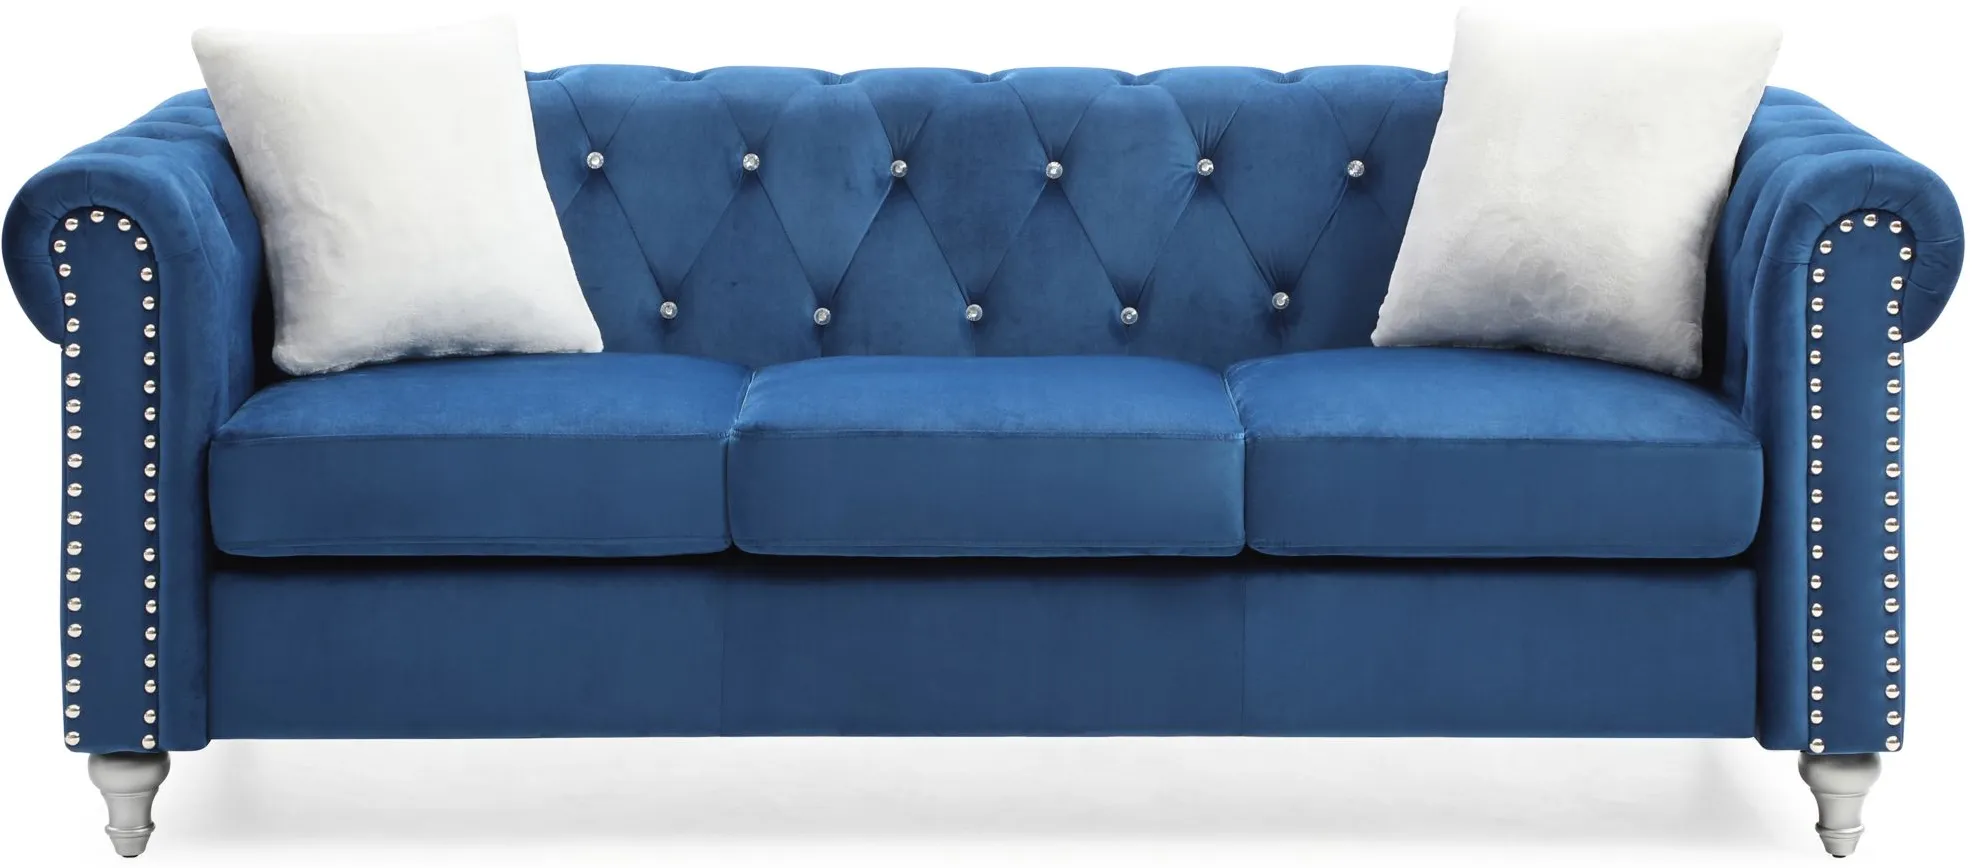 Raisa Sofa in Navy Blue by Glory Furniture